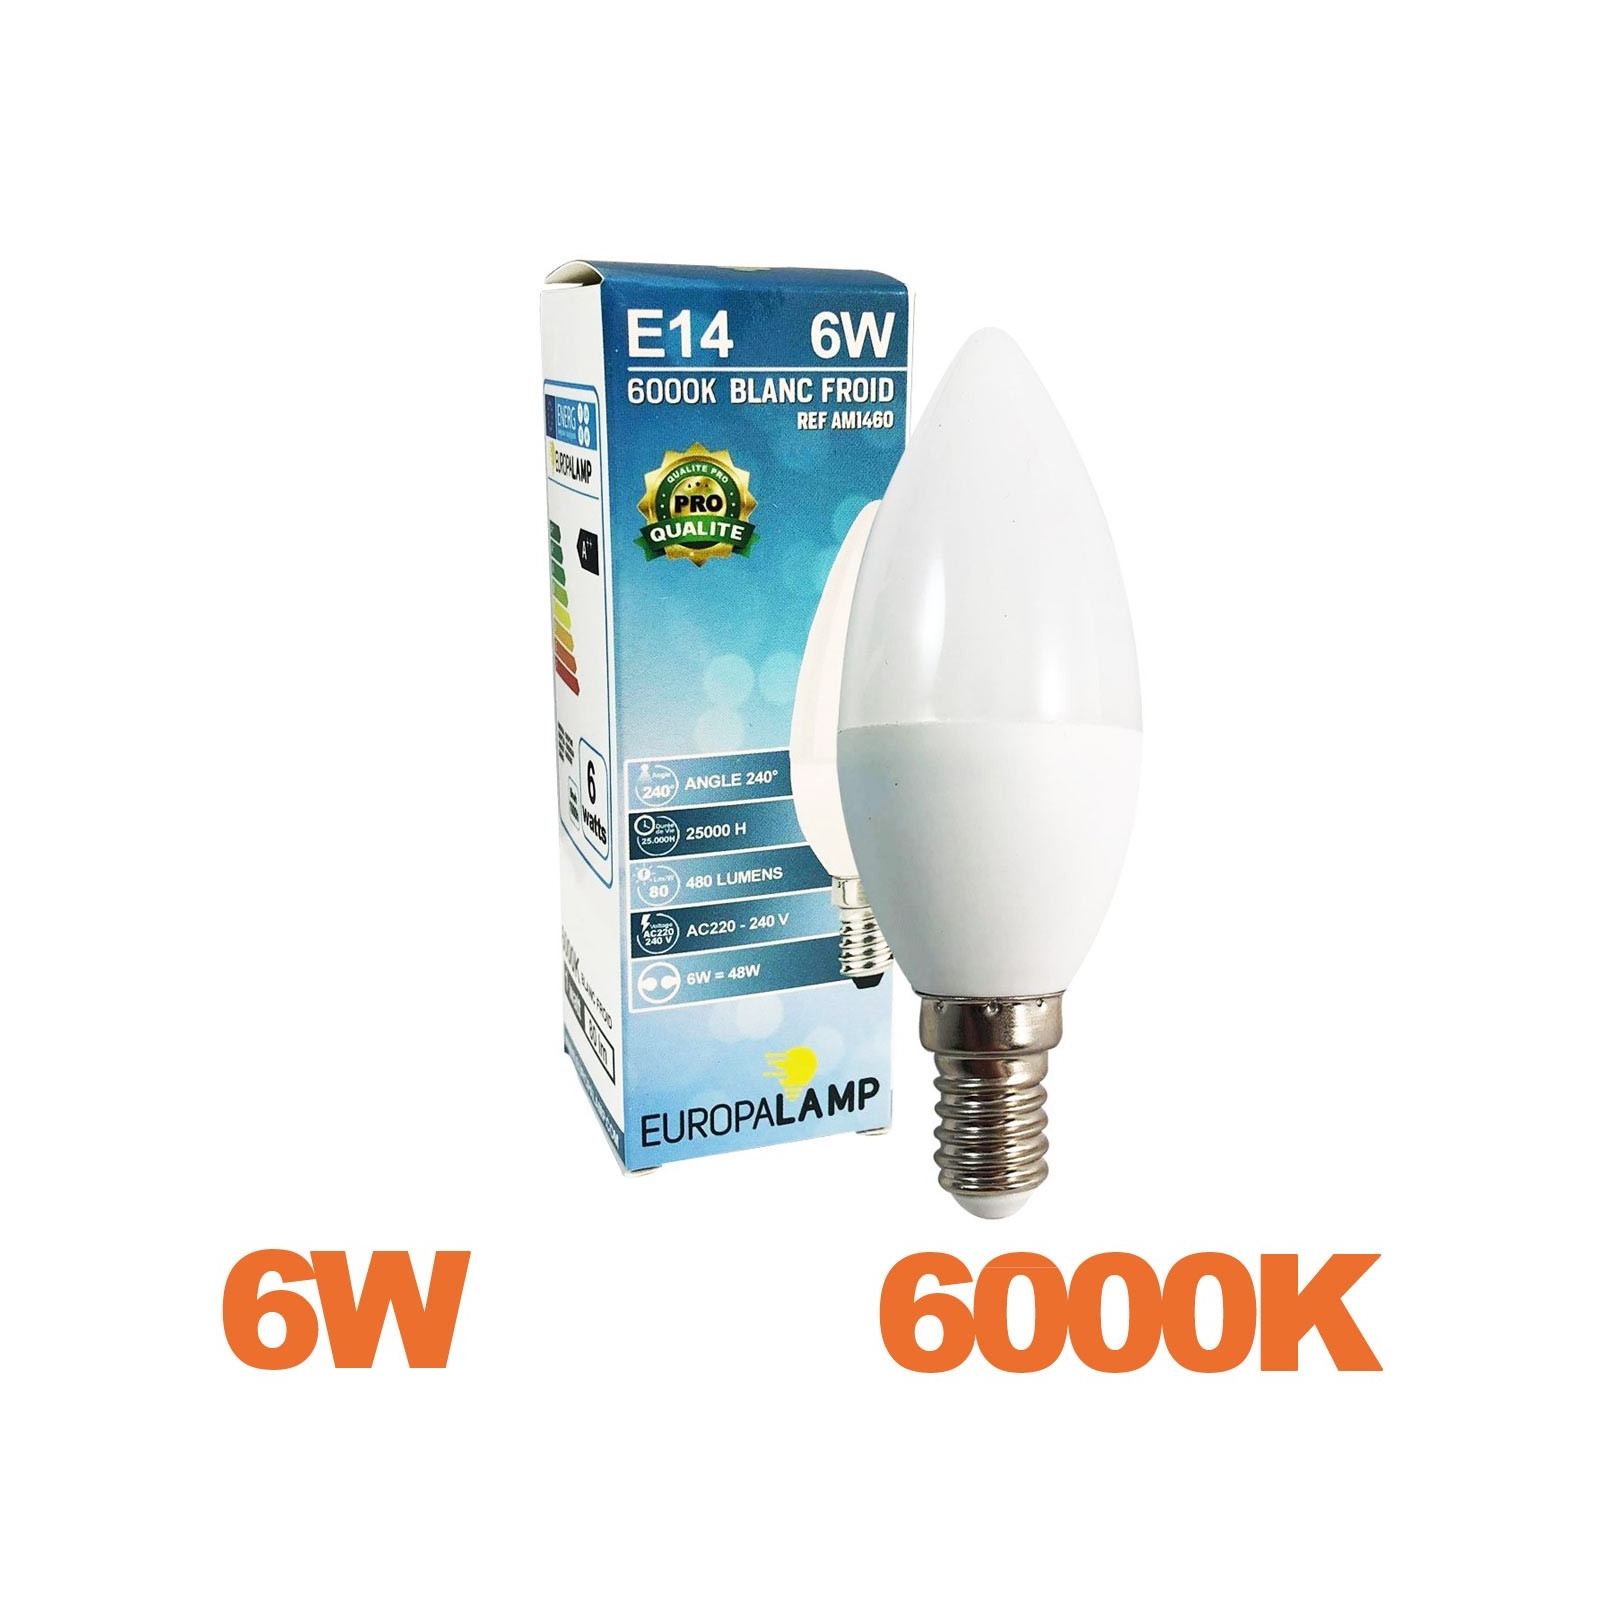 Ampoule LED blanc chaud 3 watts culot E14 - Flamme